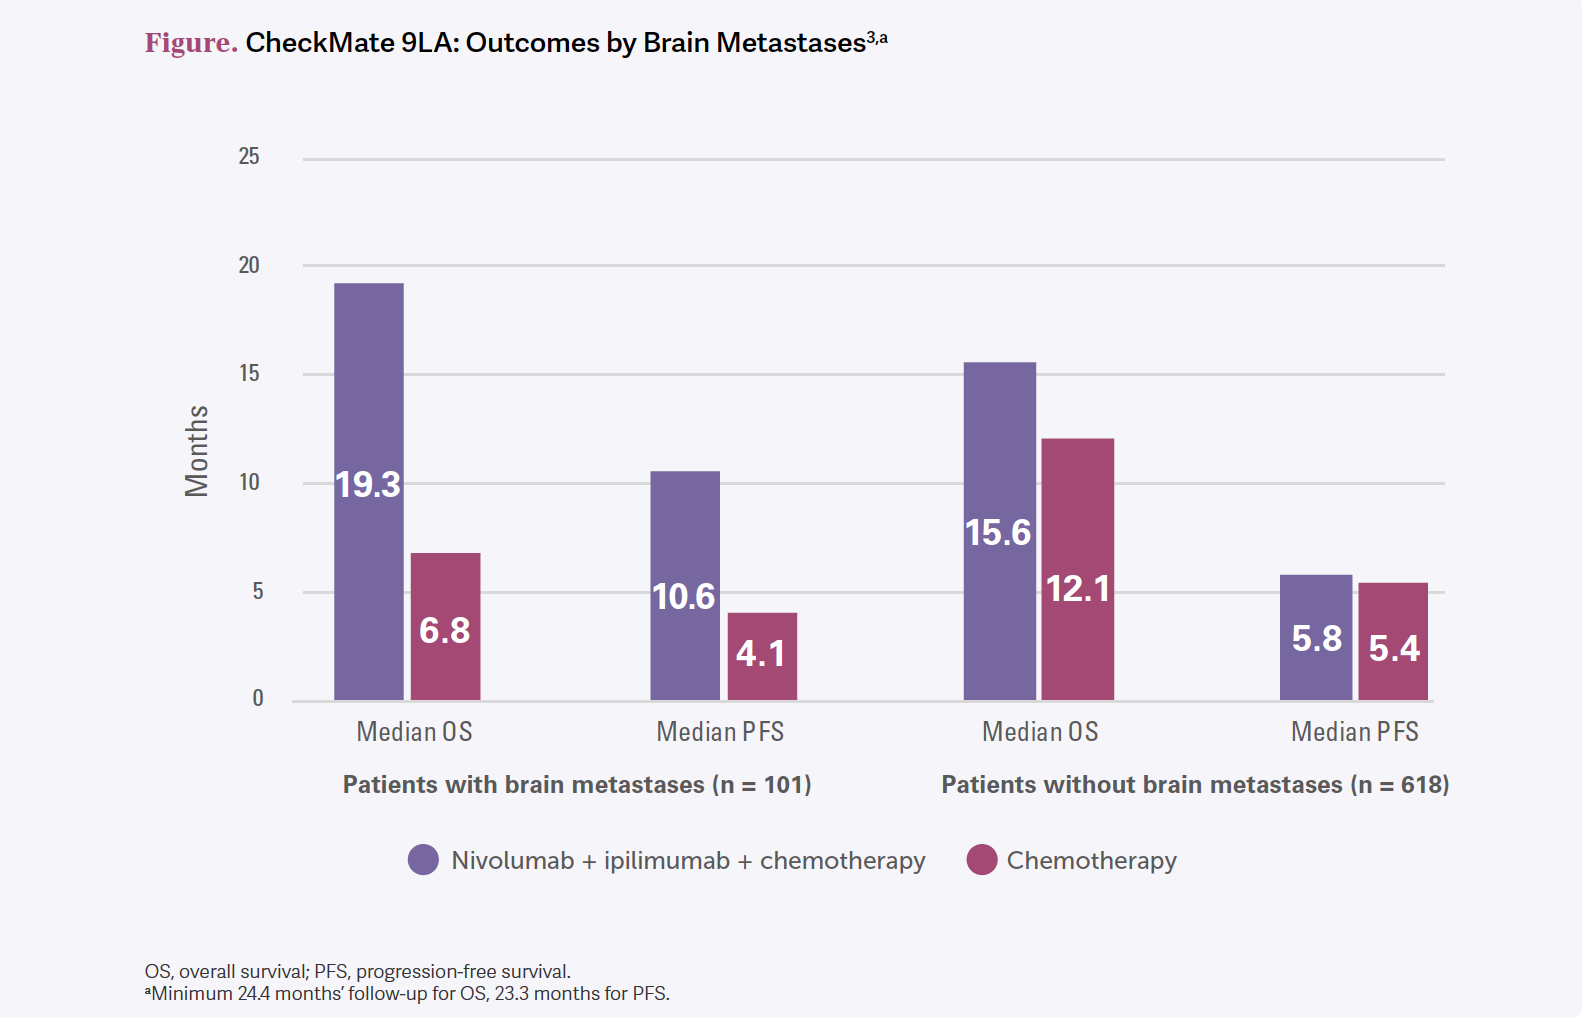 CheckMate 9LA: Outcomes by Brain Metastases